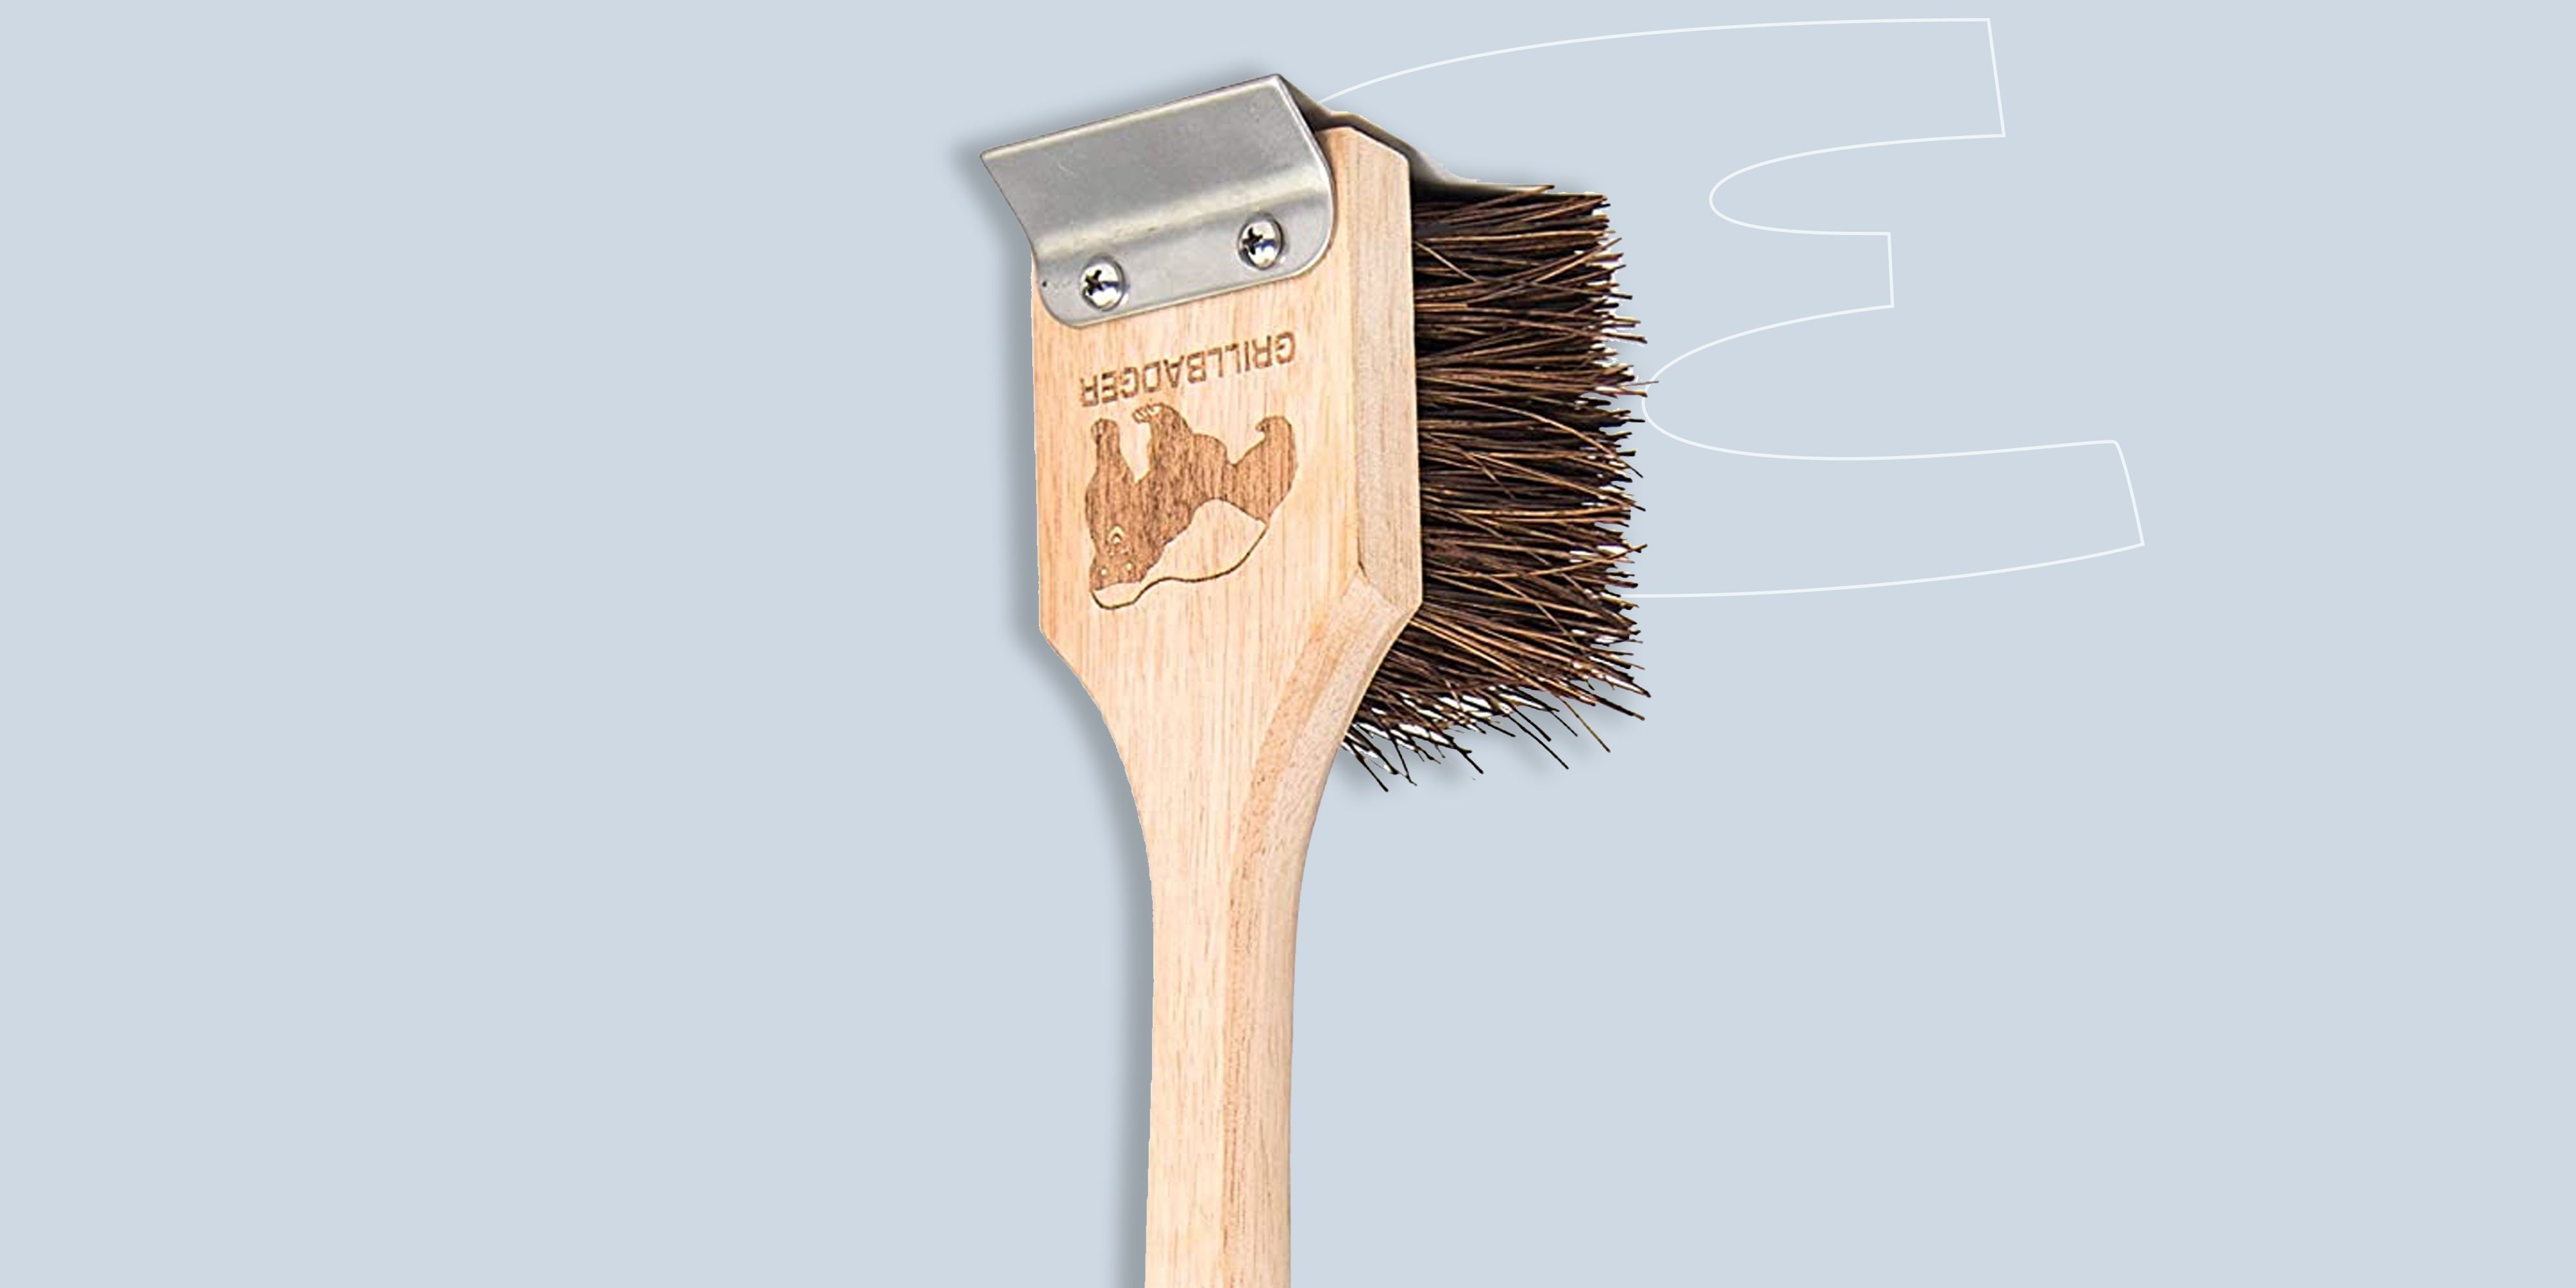 Grill Badger Brush